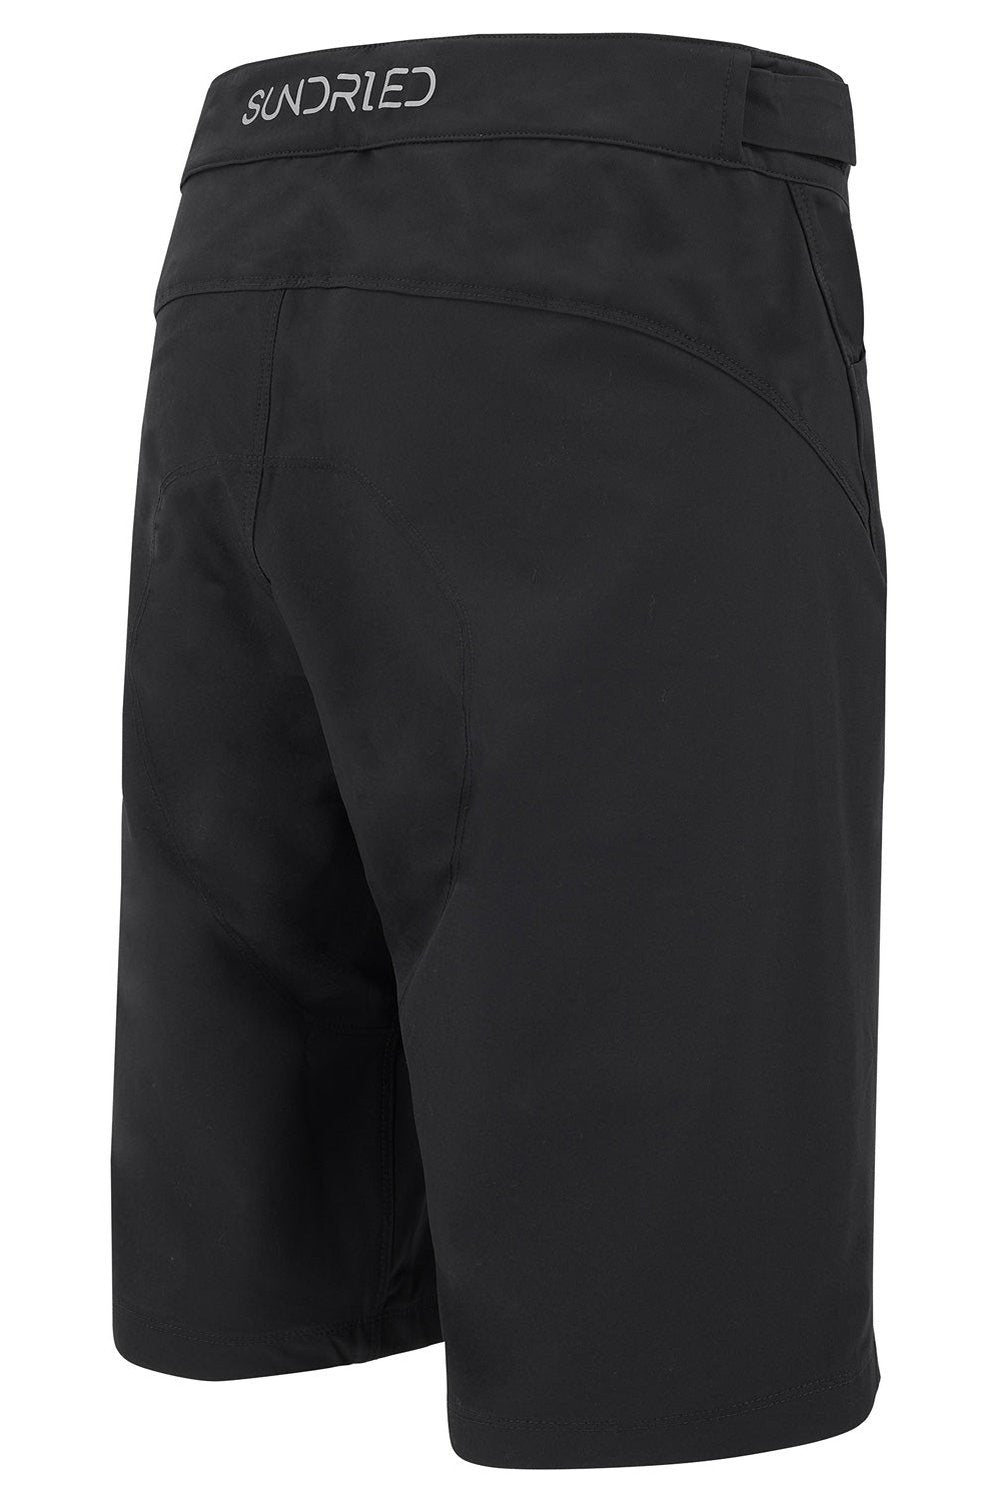 Sundried Huron Men's Mountain Bike Shorts Shorts Activewear